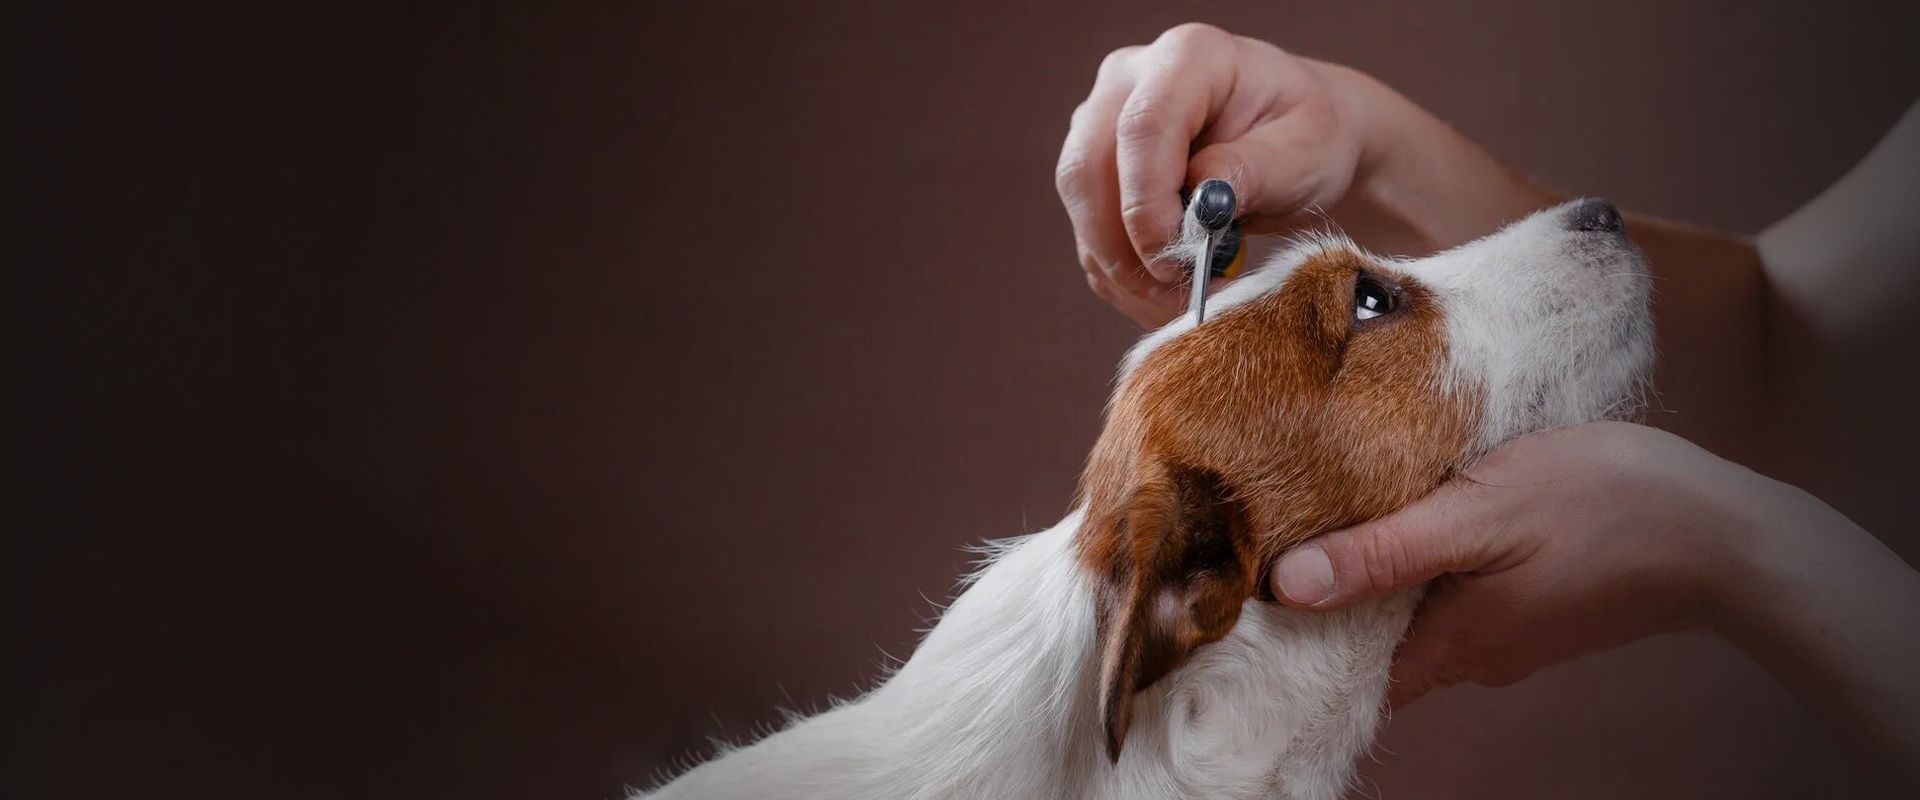 pet groomer brushing jack russell dog